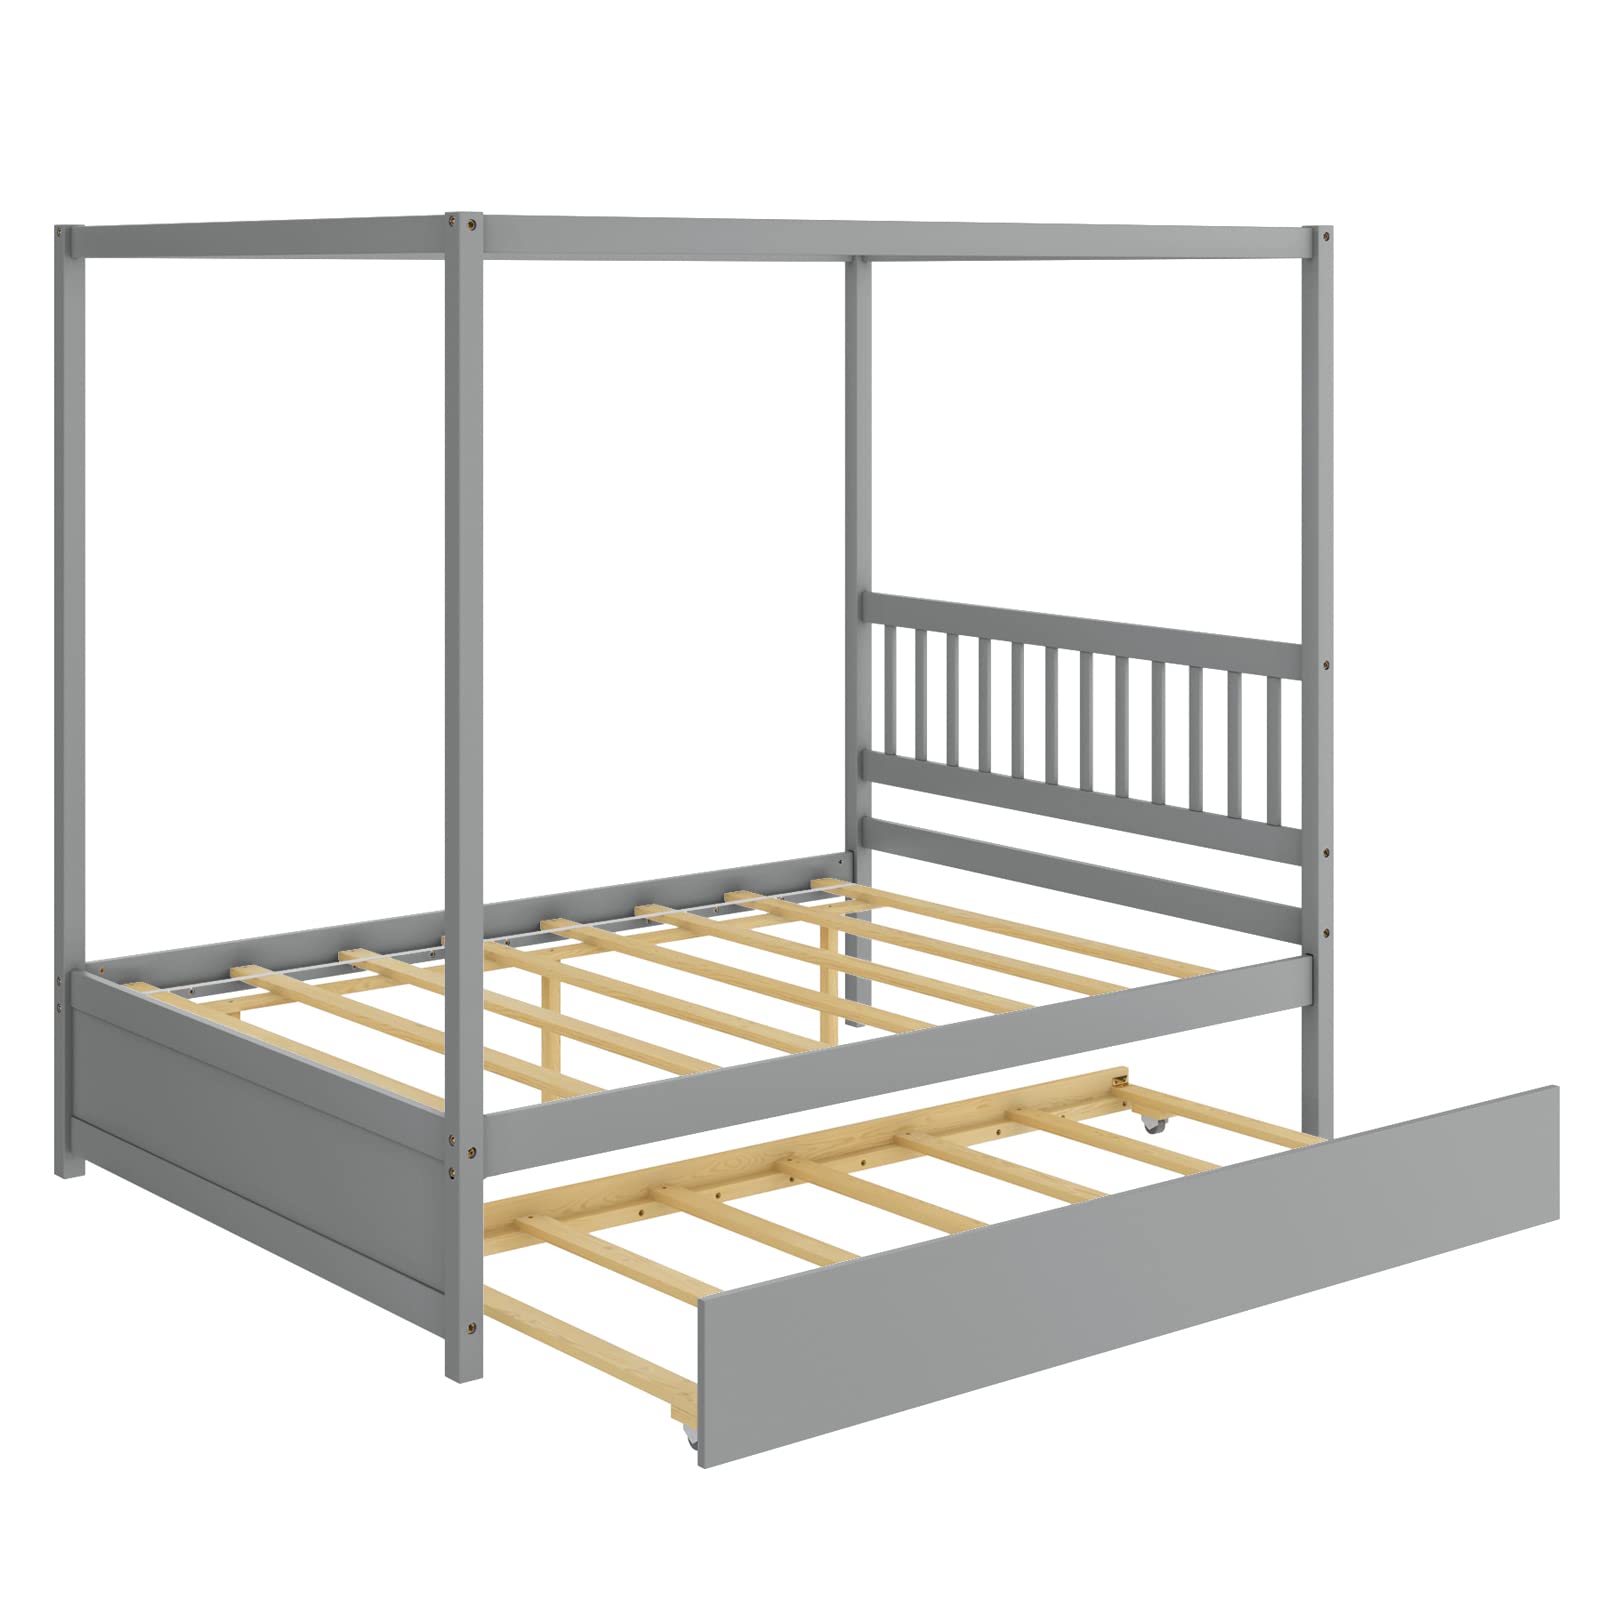 Giantex Canopy Bed w/ Trundle, Full Size Kids Solid Wood Platform Bed Frame